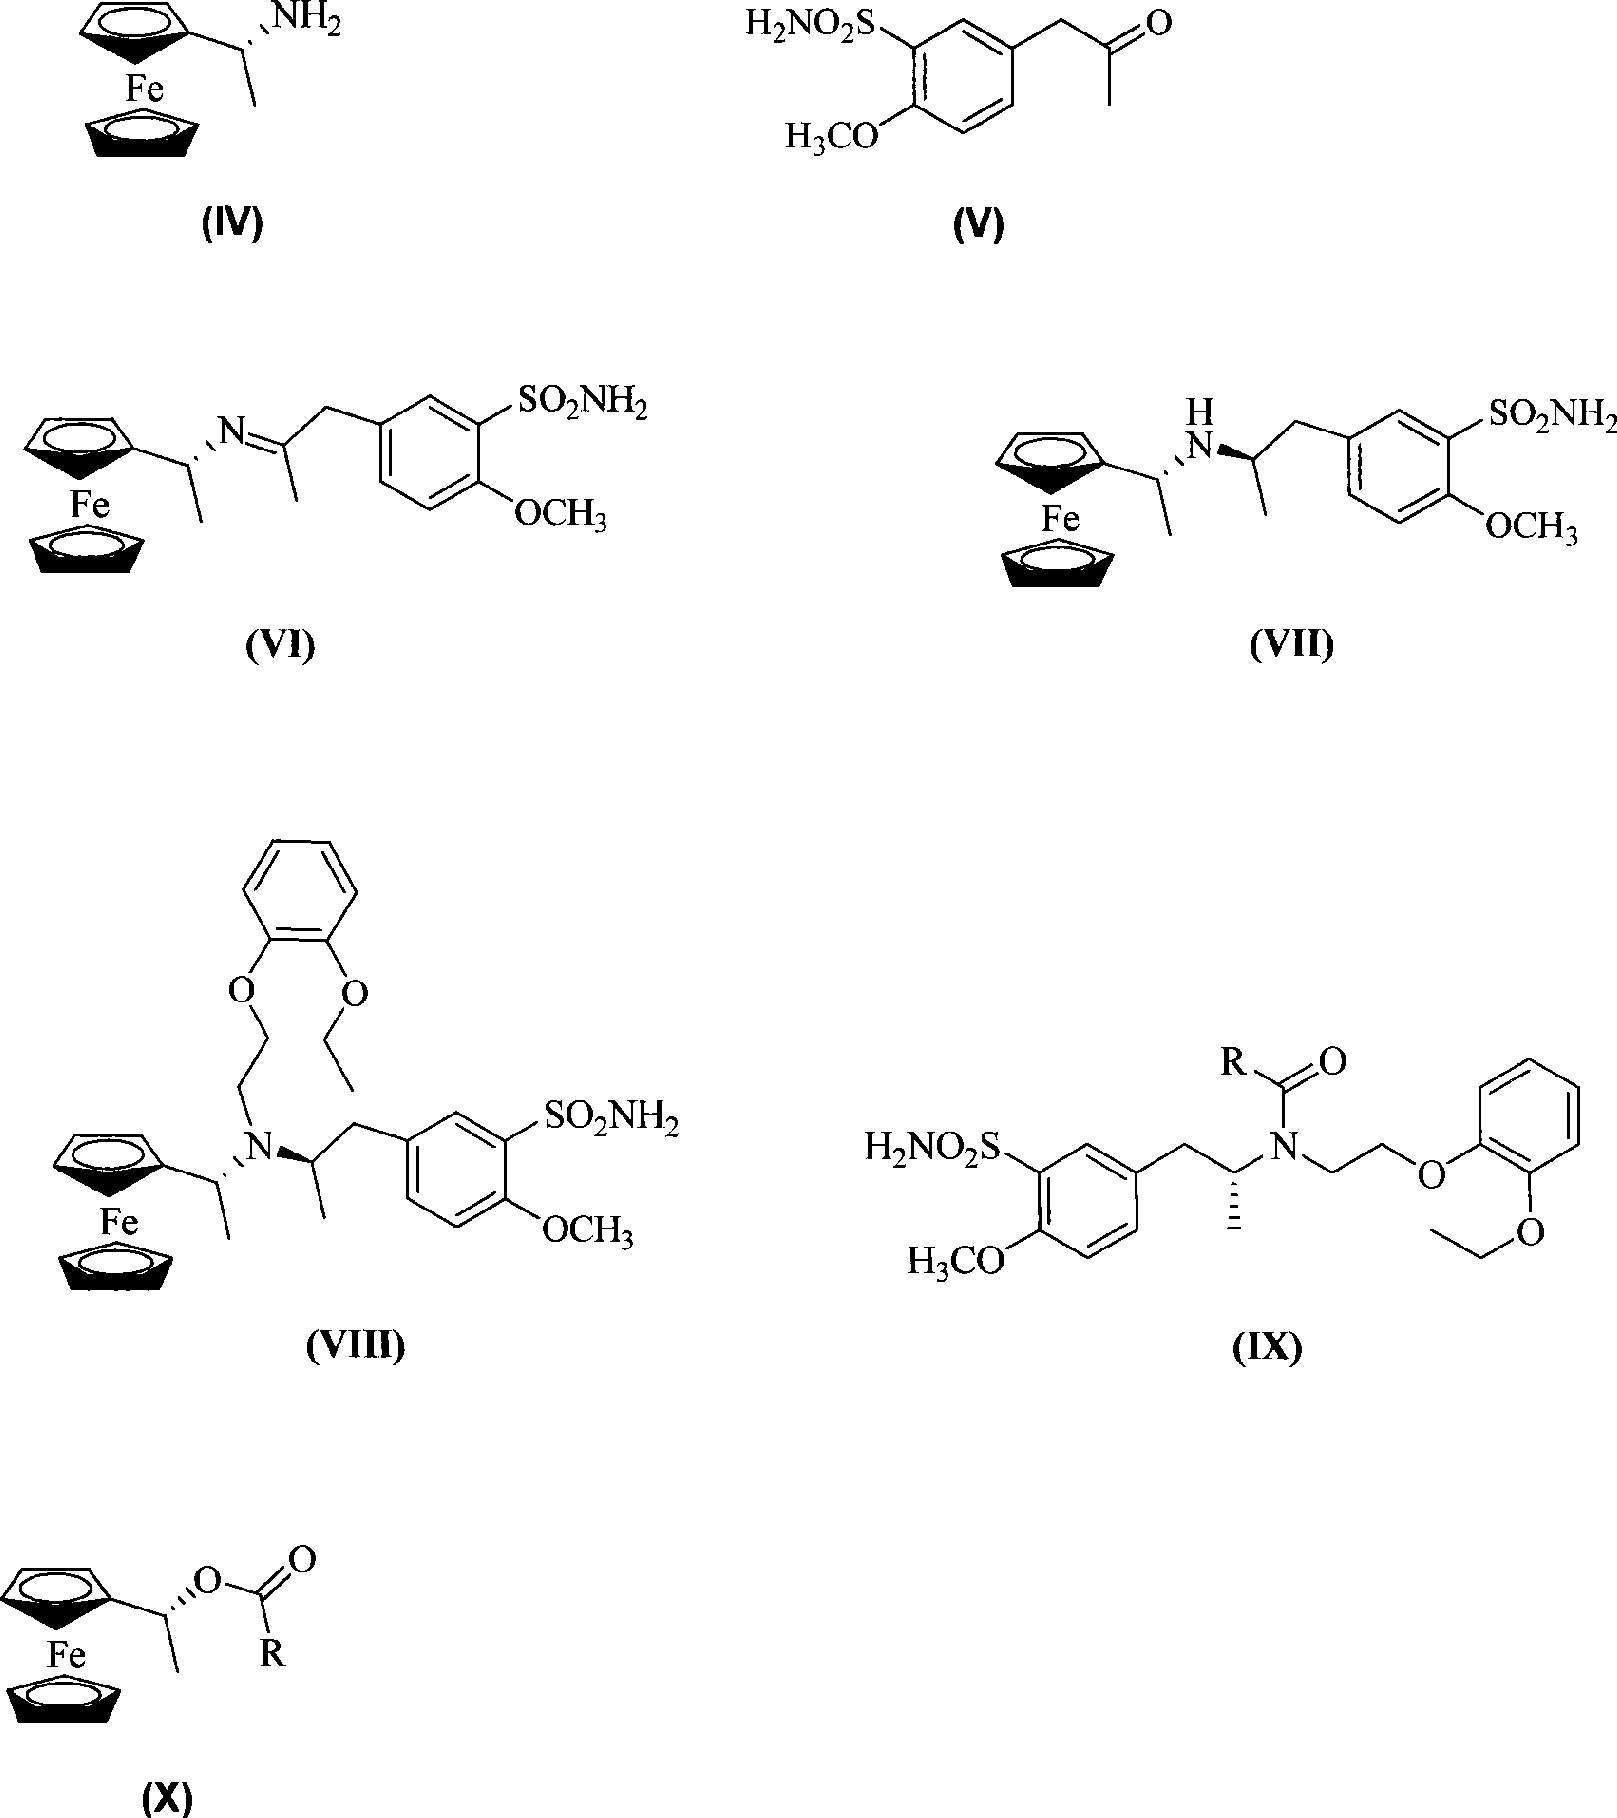 Novel unsymmetrical preparation of tamsulosin hydrochloride